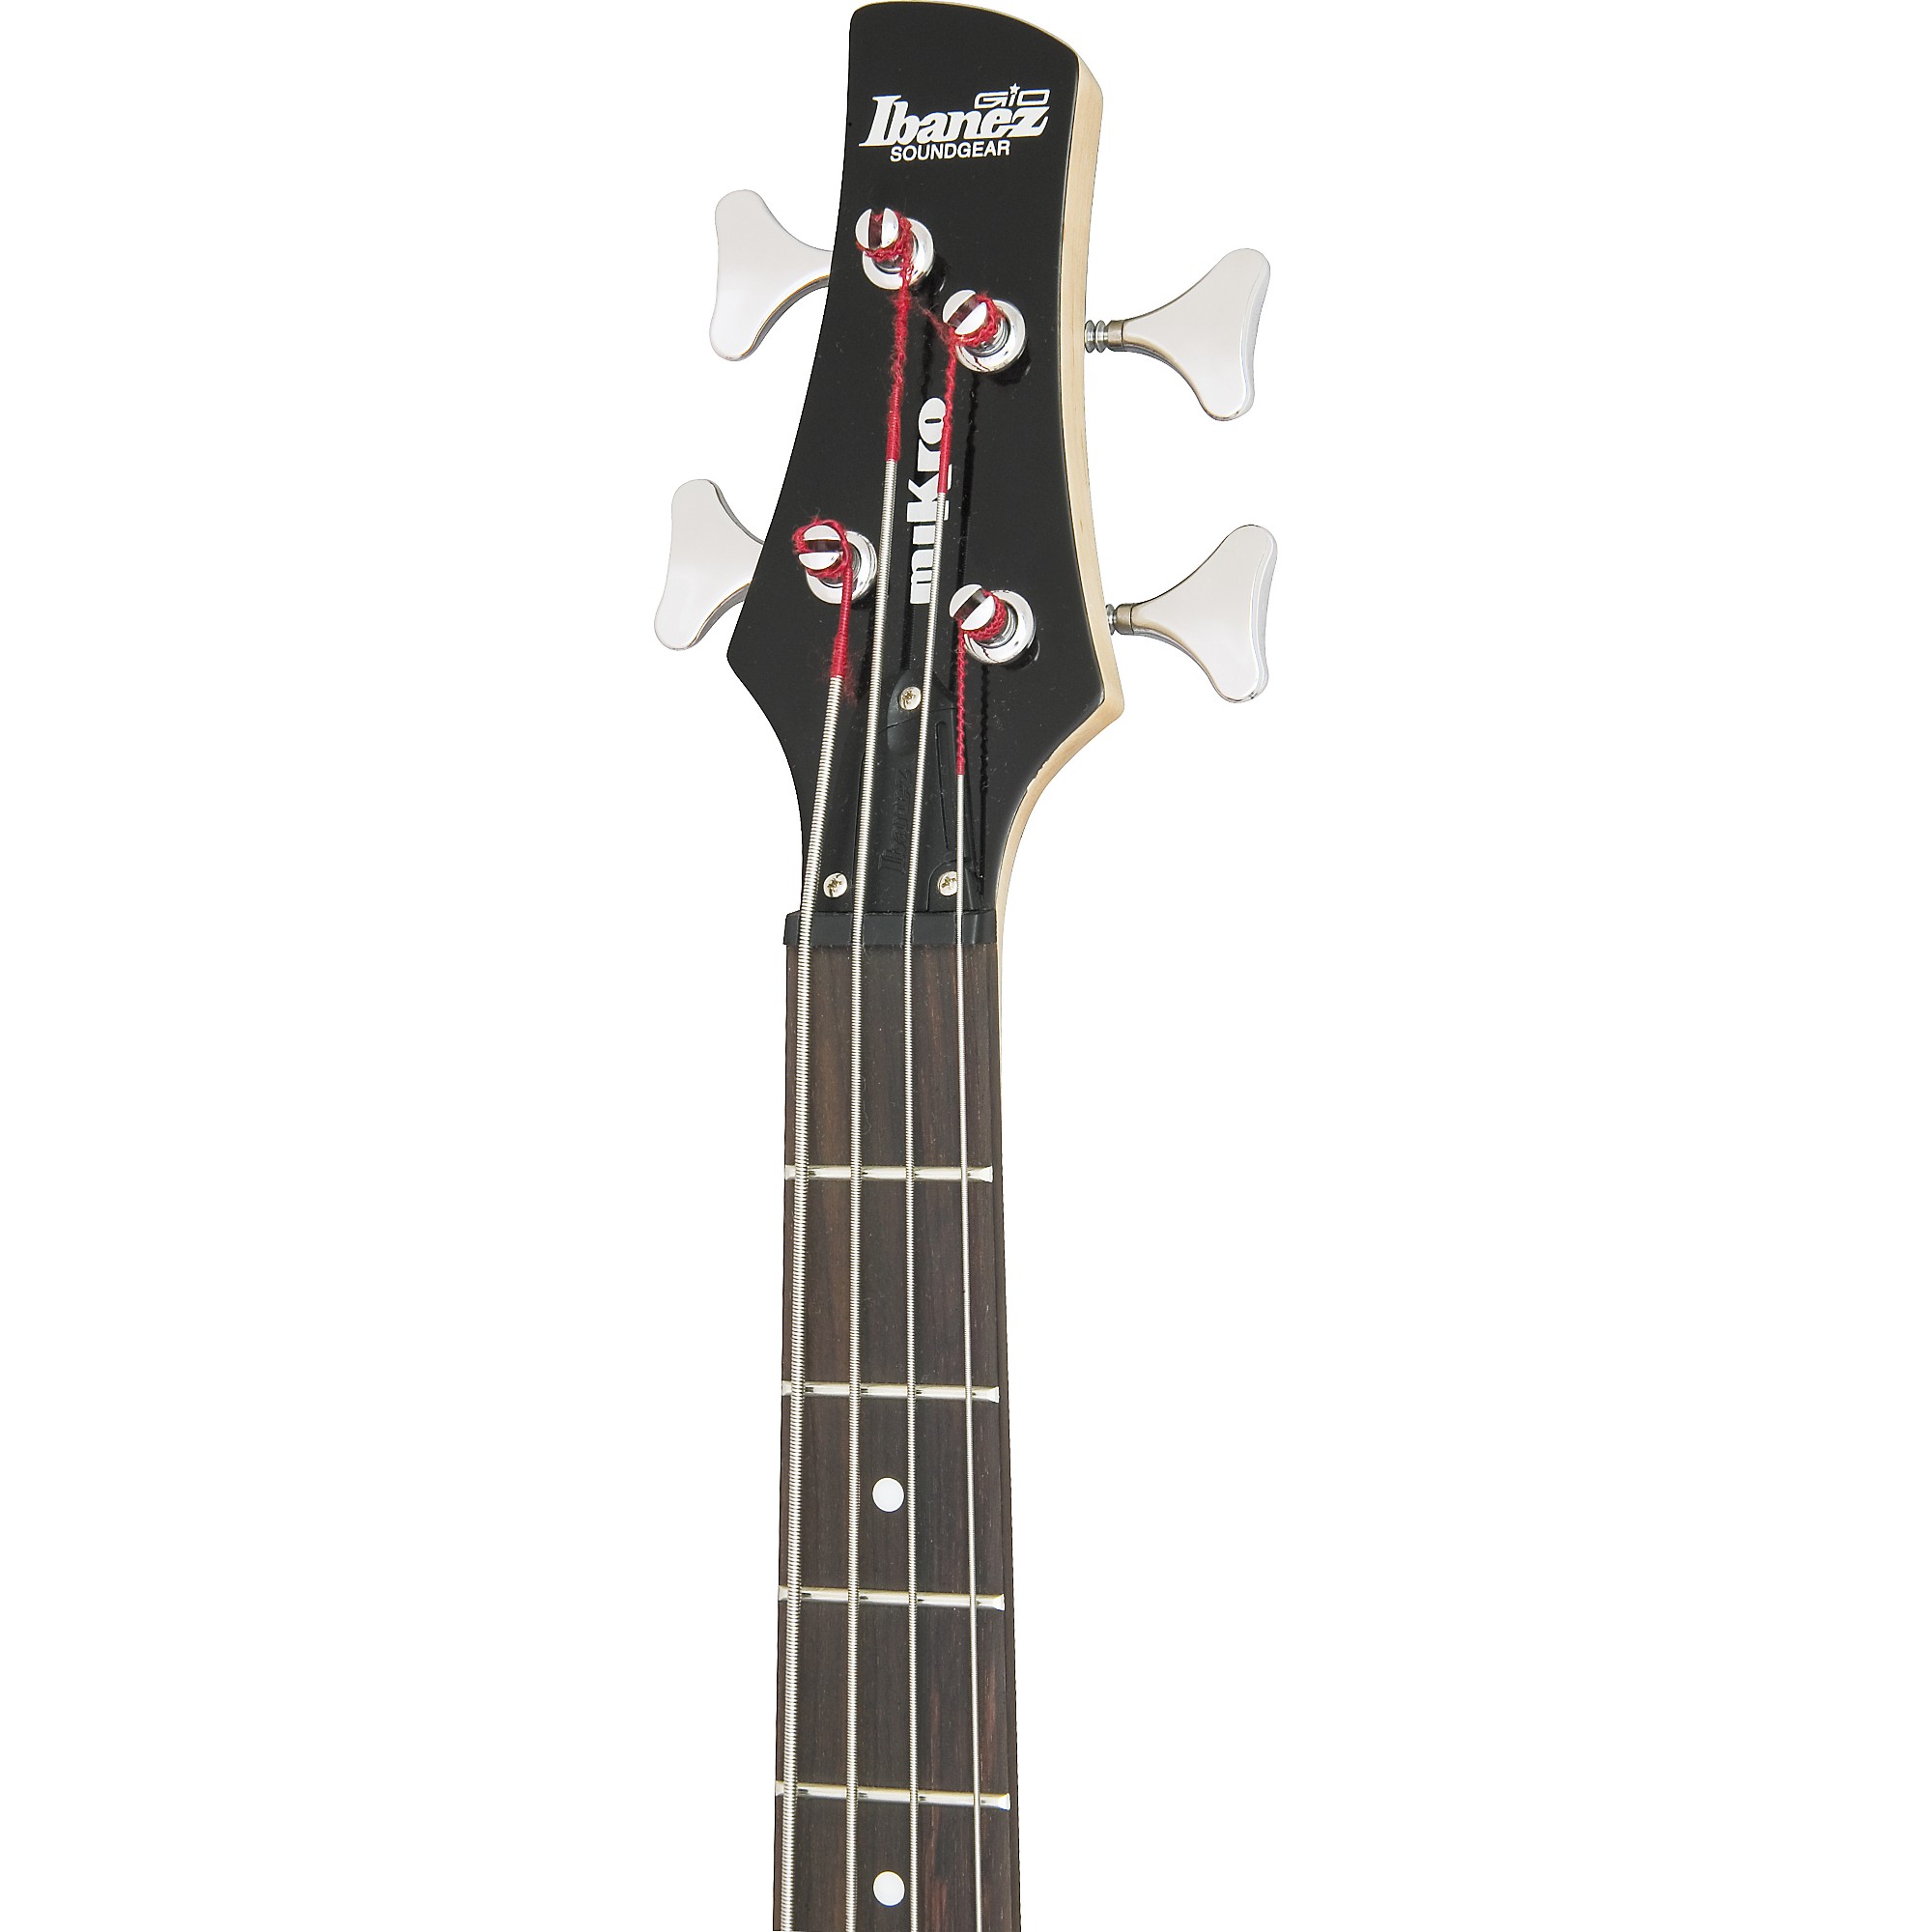 Ibanez GSRM20 miKro Бас-гитара с короткой мензурой Starlight Blue цена и фото